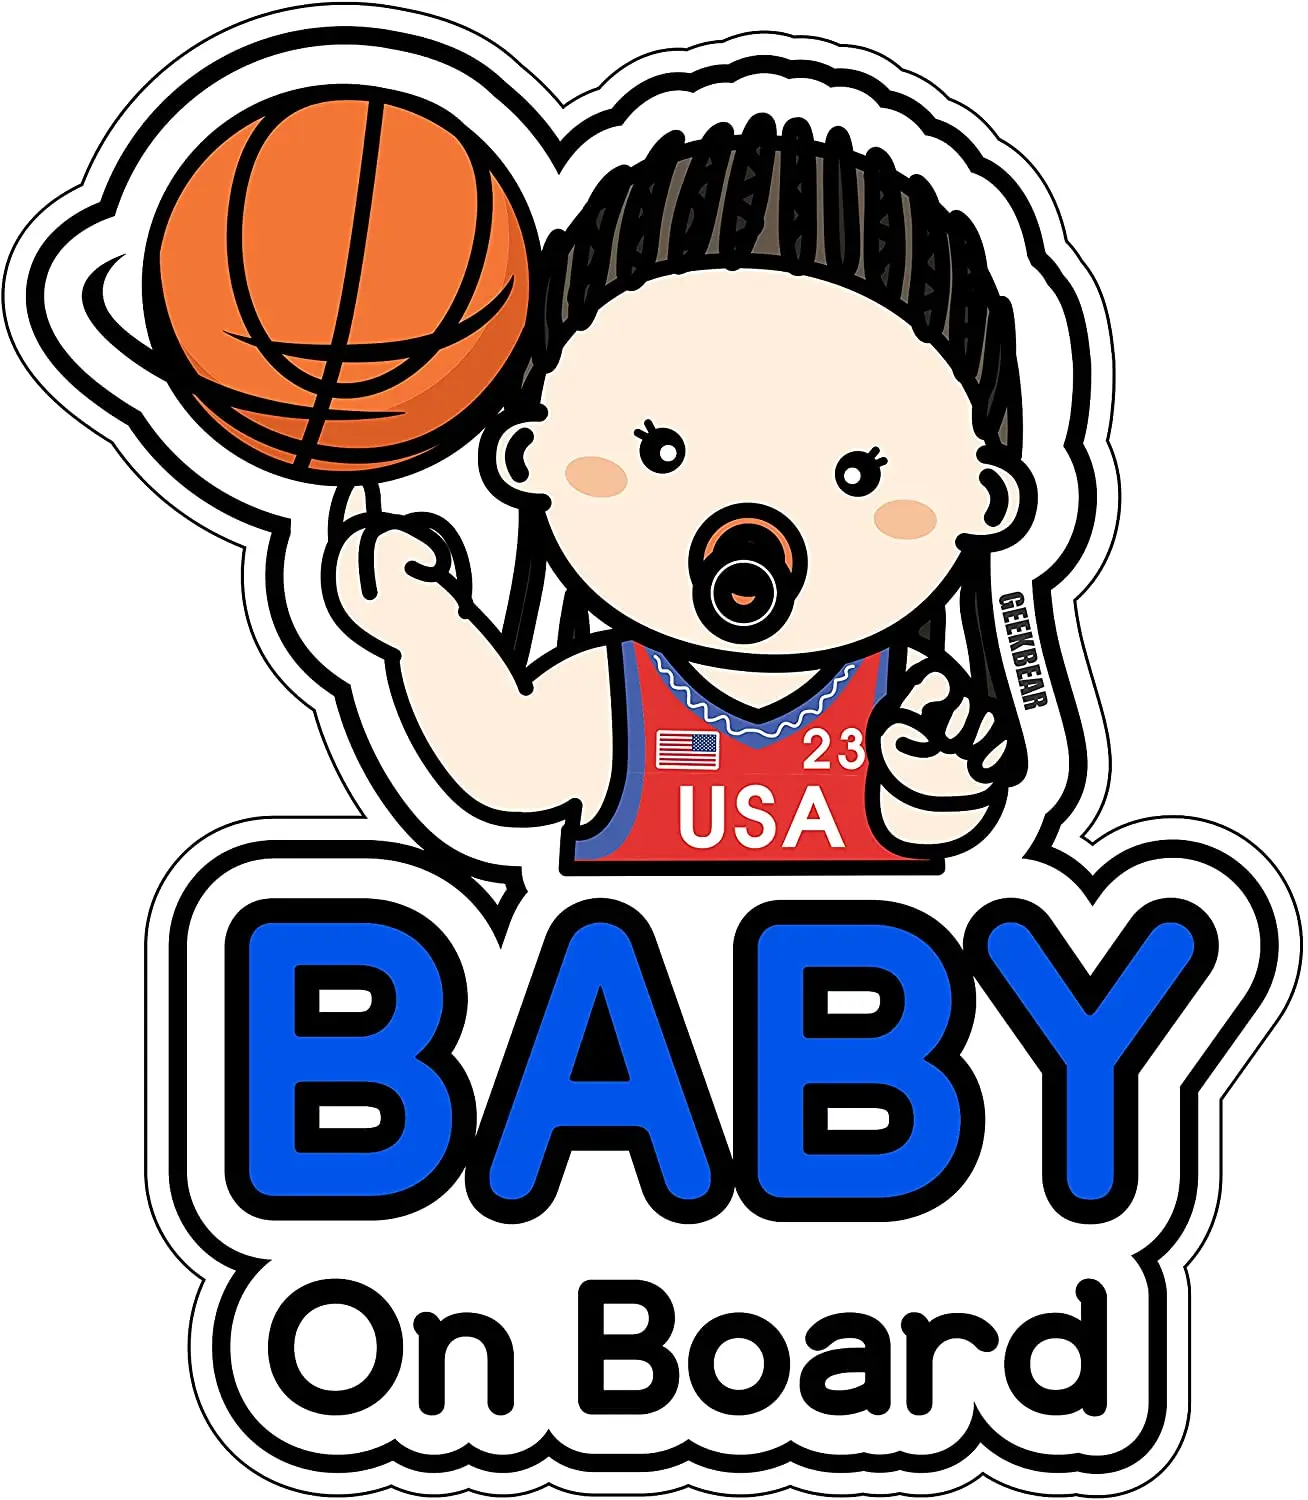 Наклейка с ребенком на борту (девочка-баскетболист) - Наклейка на бампер автомобиля для ребенка - Наклейка на окно автомобиля для ребенка 17 см * 15 см